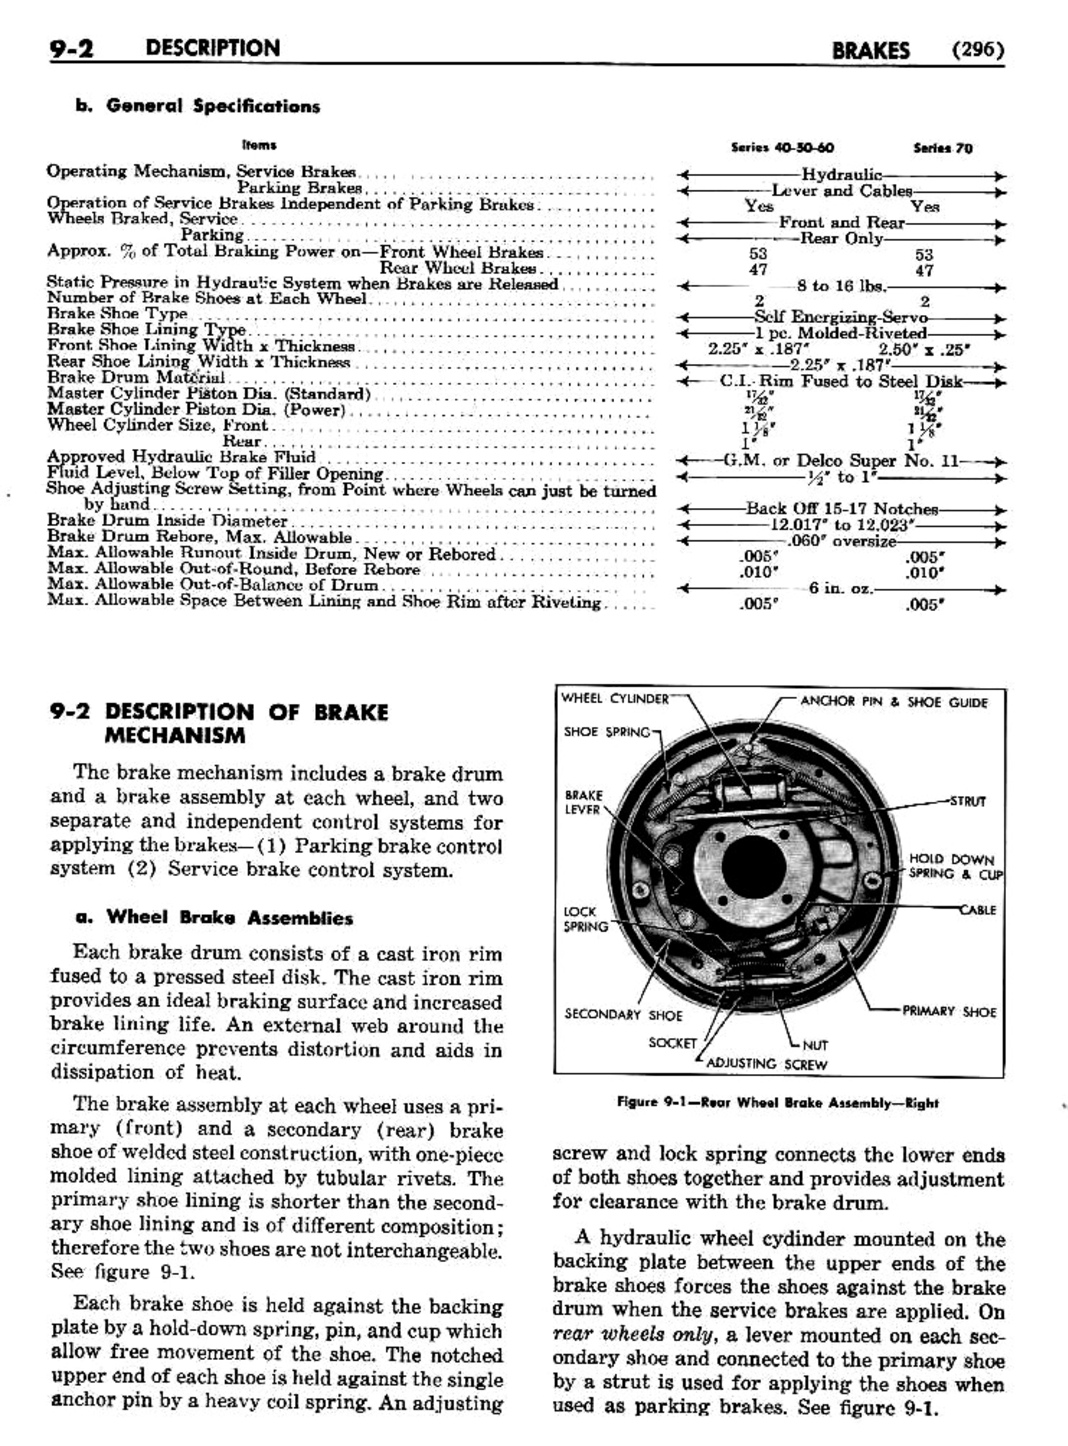 n_10 1956 Buick Shop Manual - Brakes-002-002.jpg